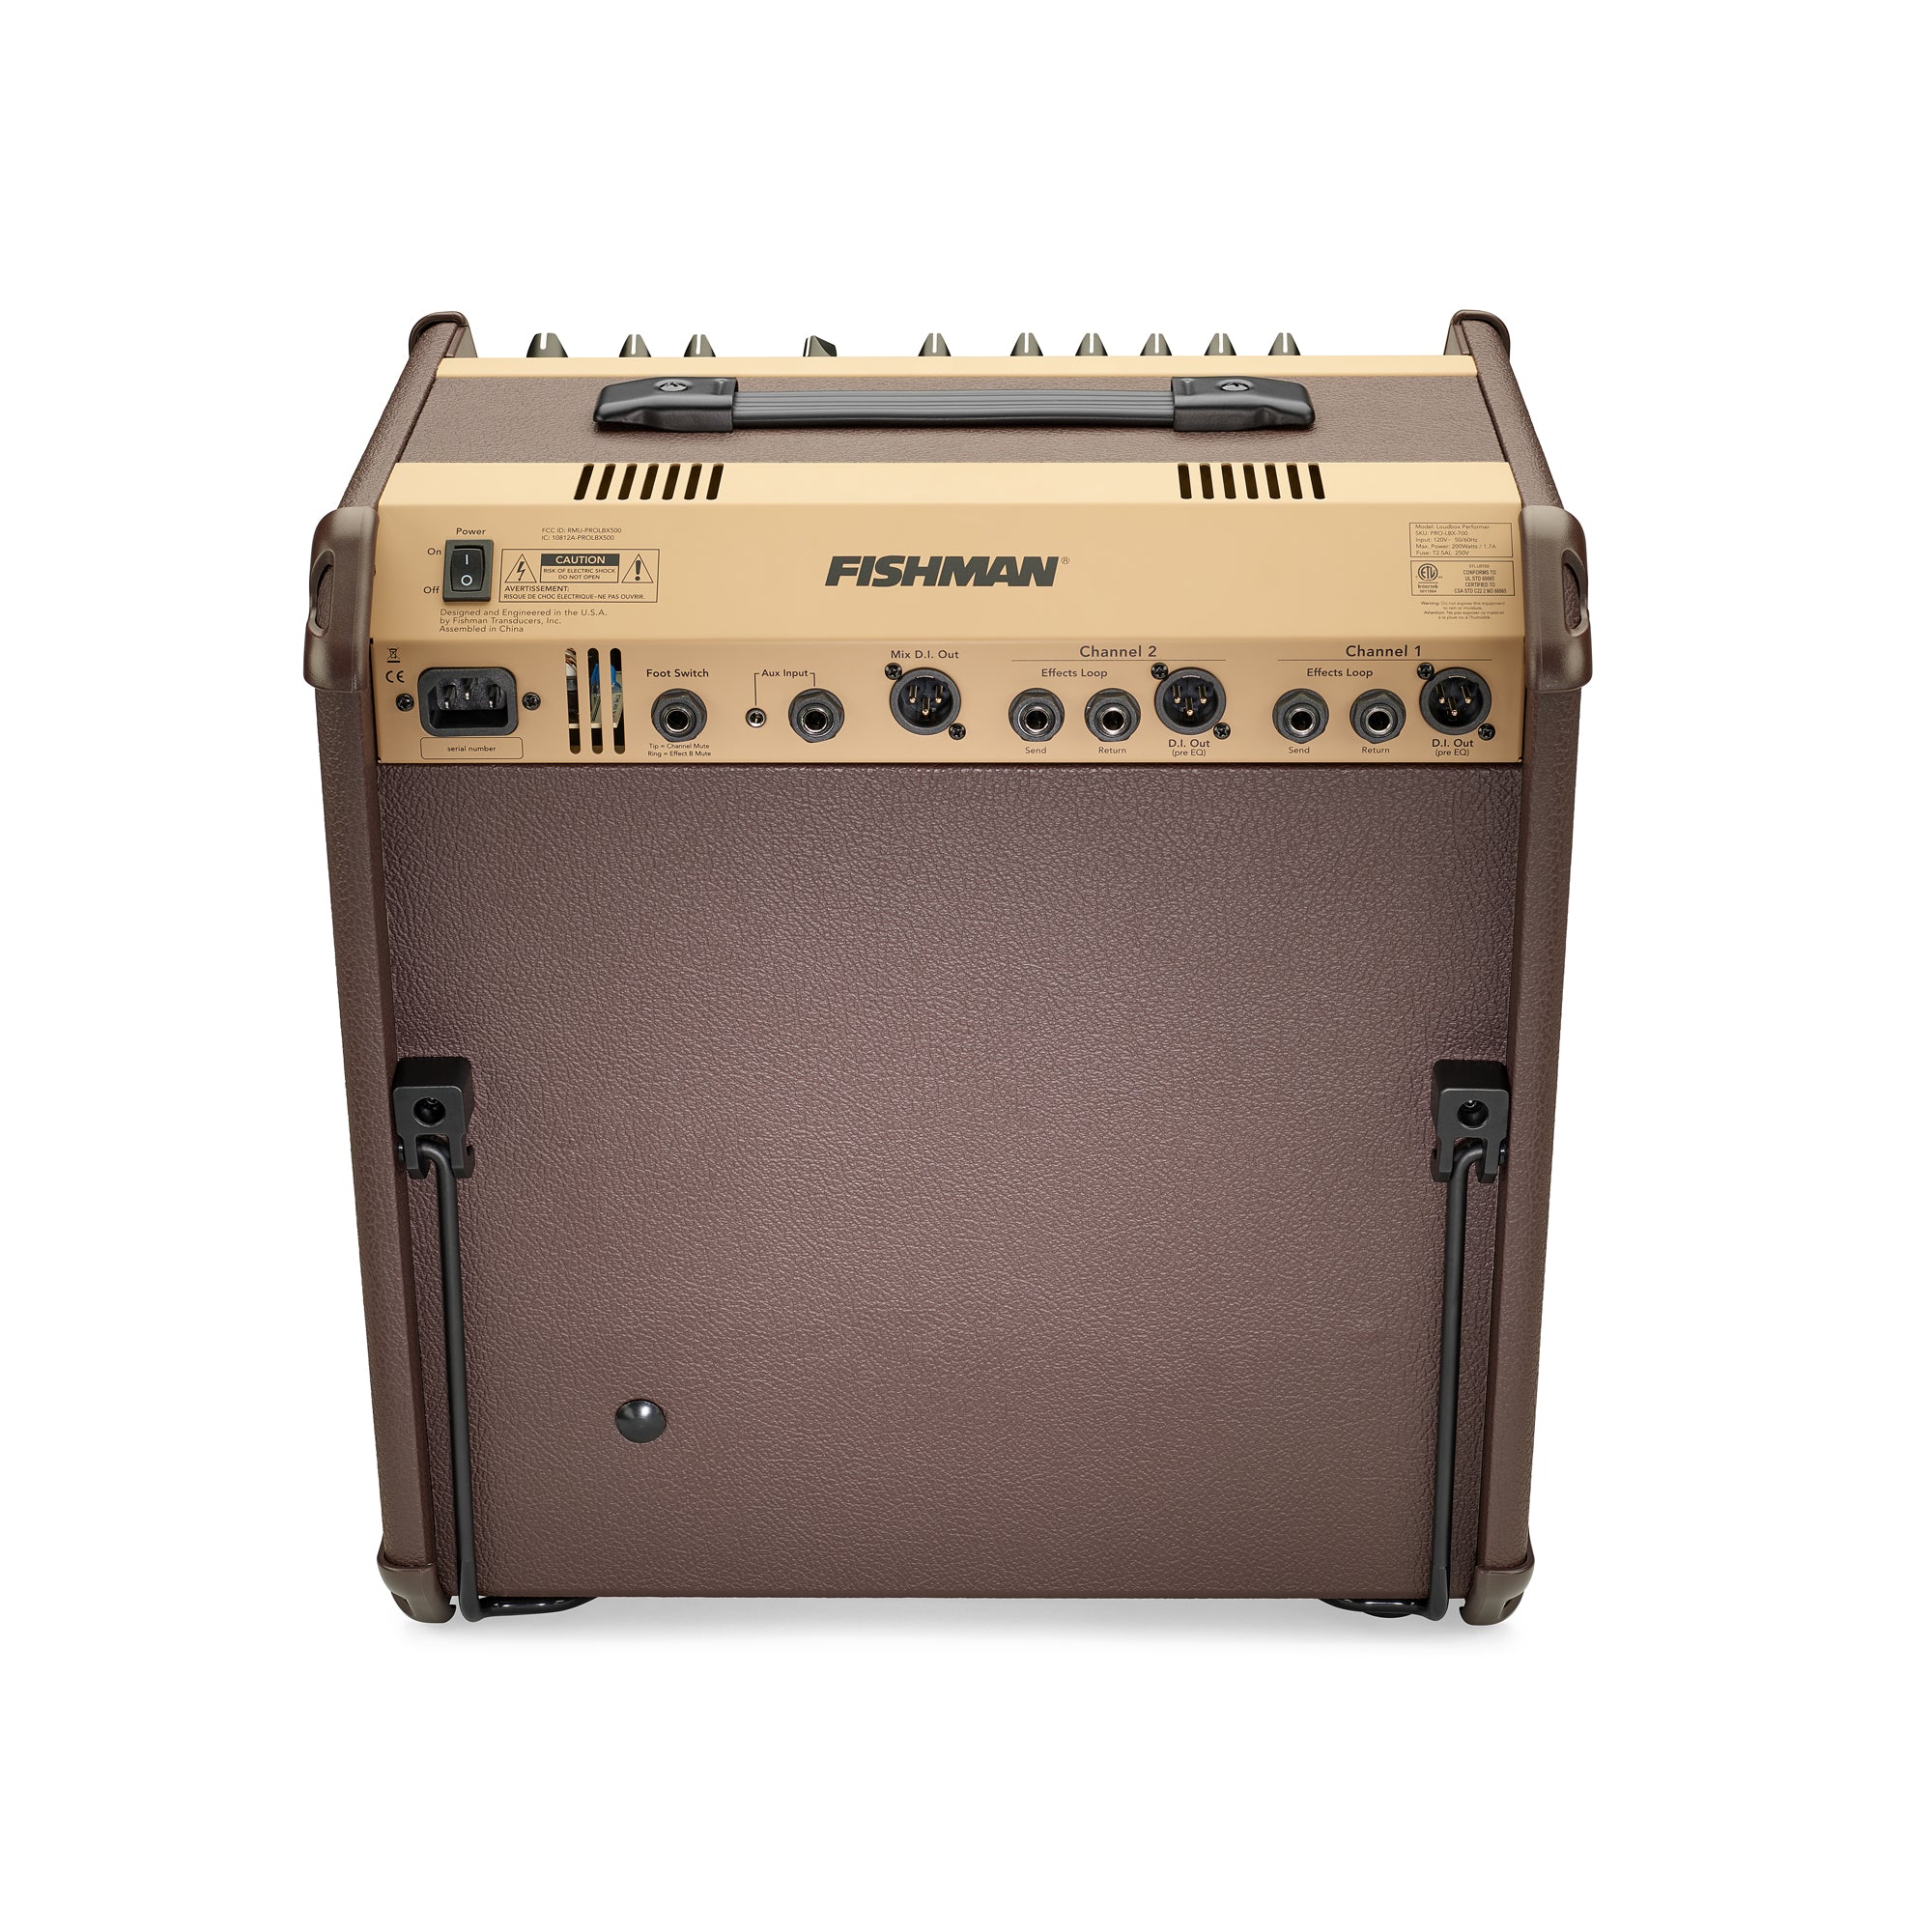 Fishman Loudbox Performer Amplifier